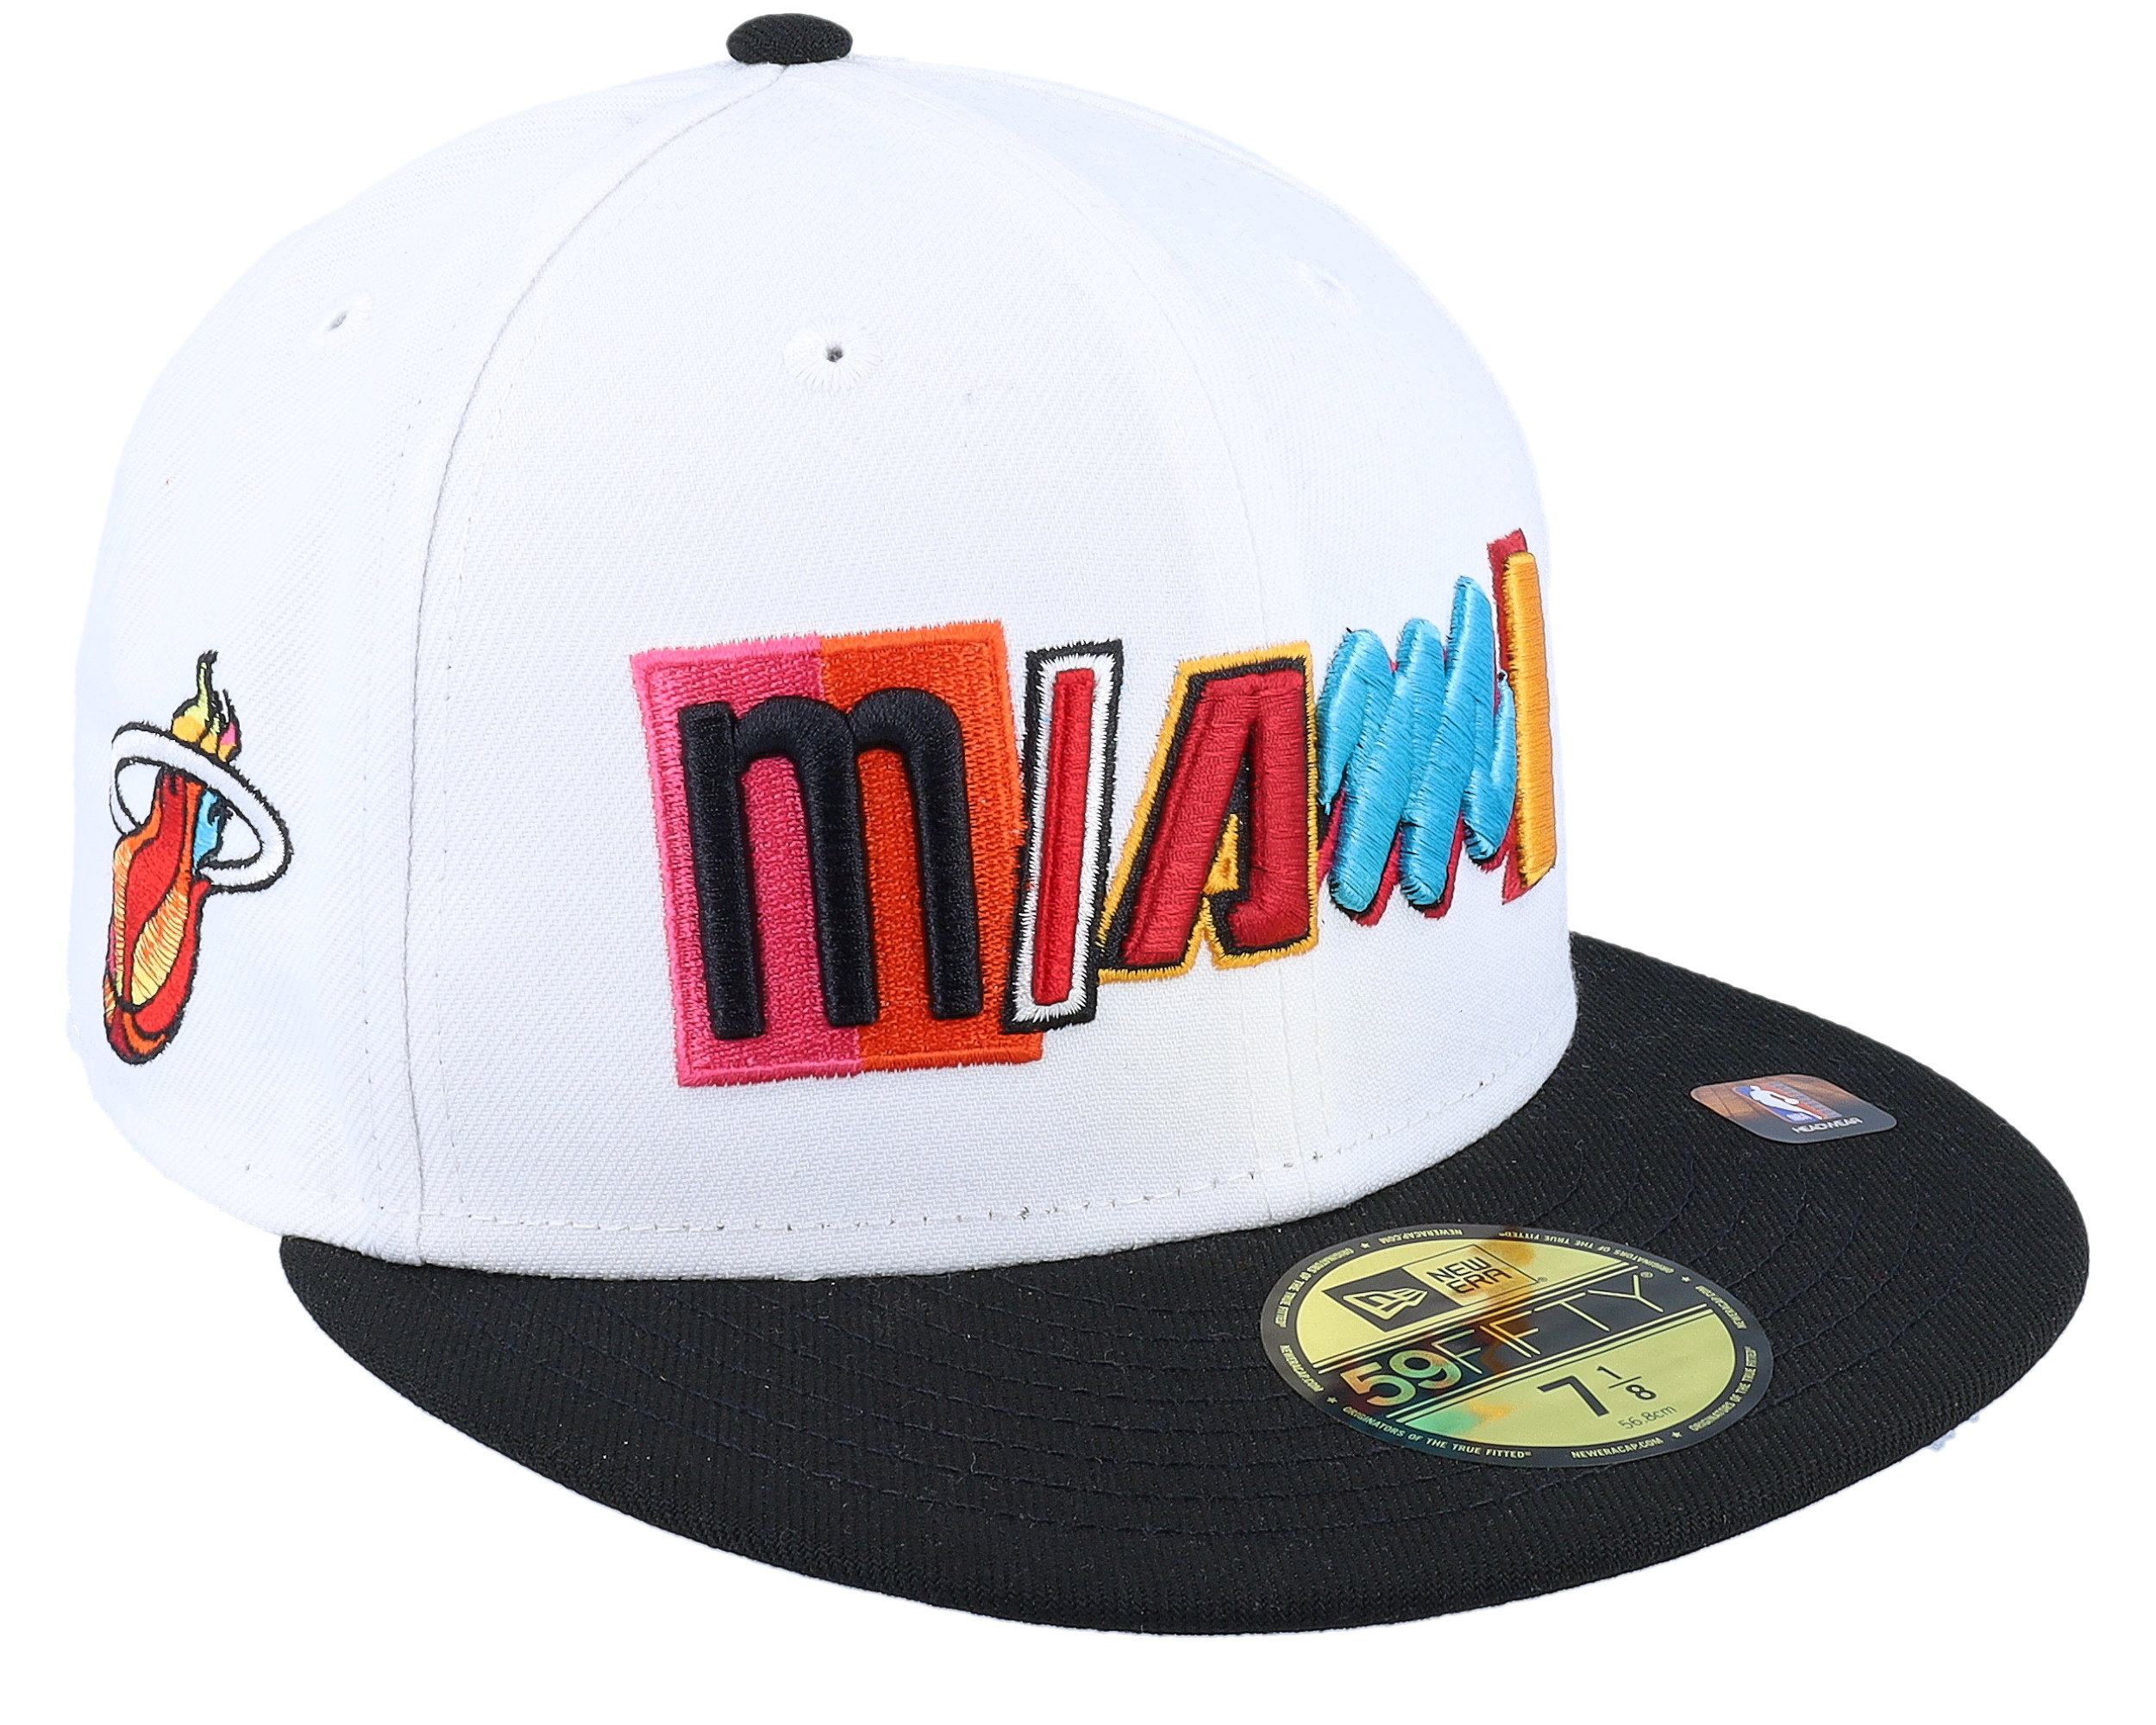 Miami Heat Hats, Heat Snapbacks, Fitted Hats, Beanies